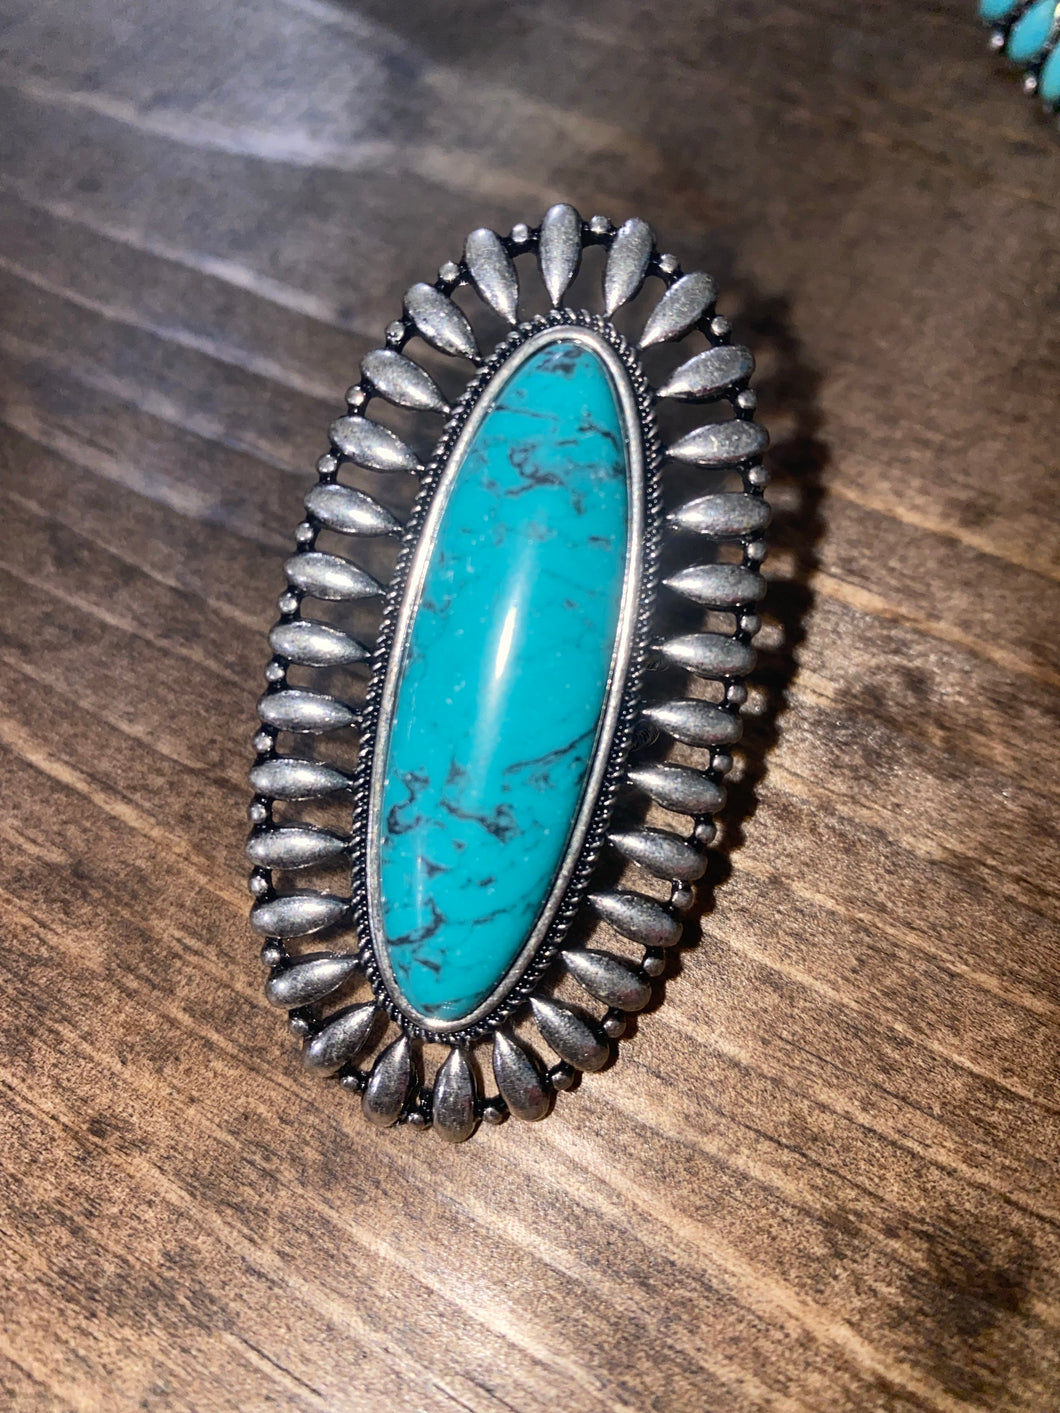 Boujee Turquoise Ring